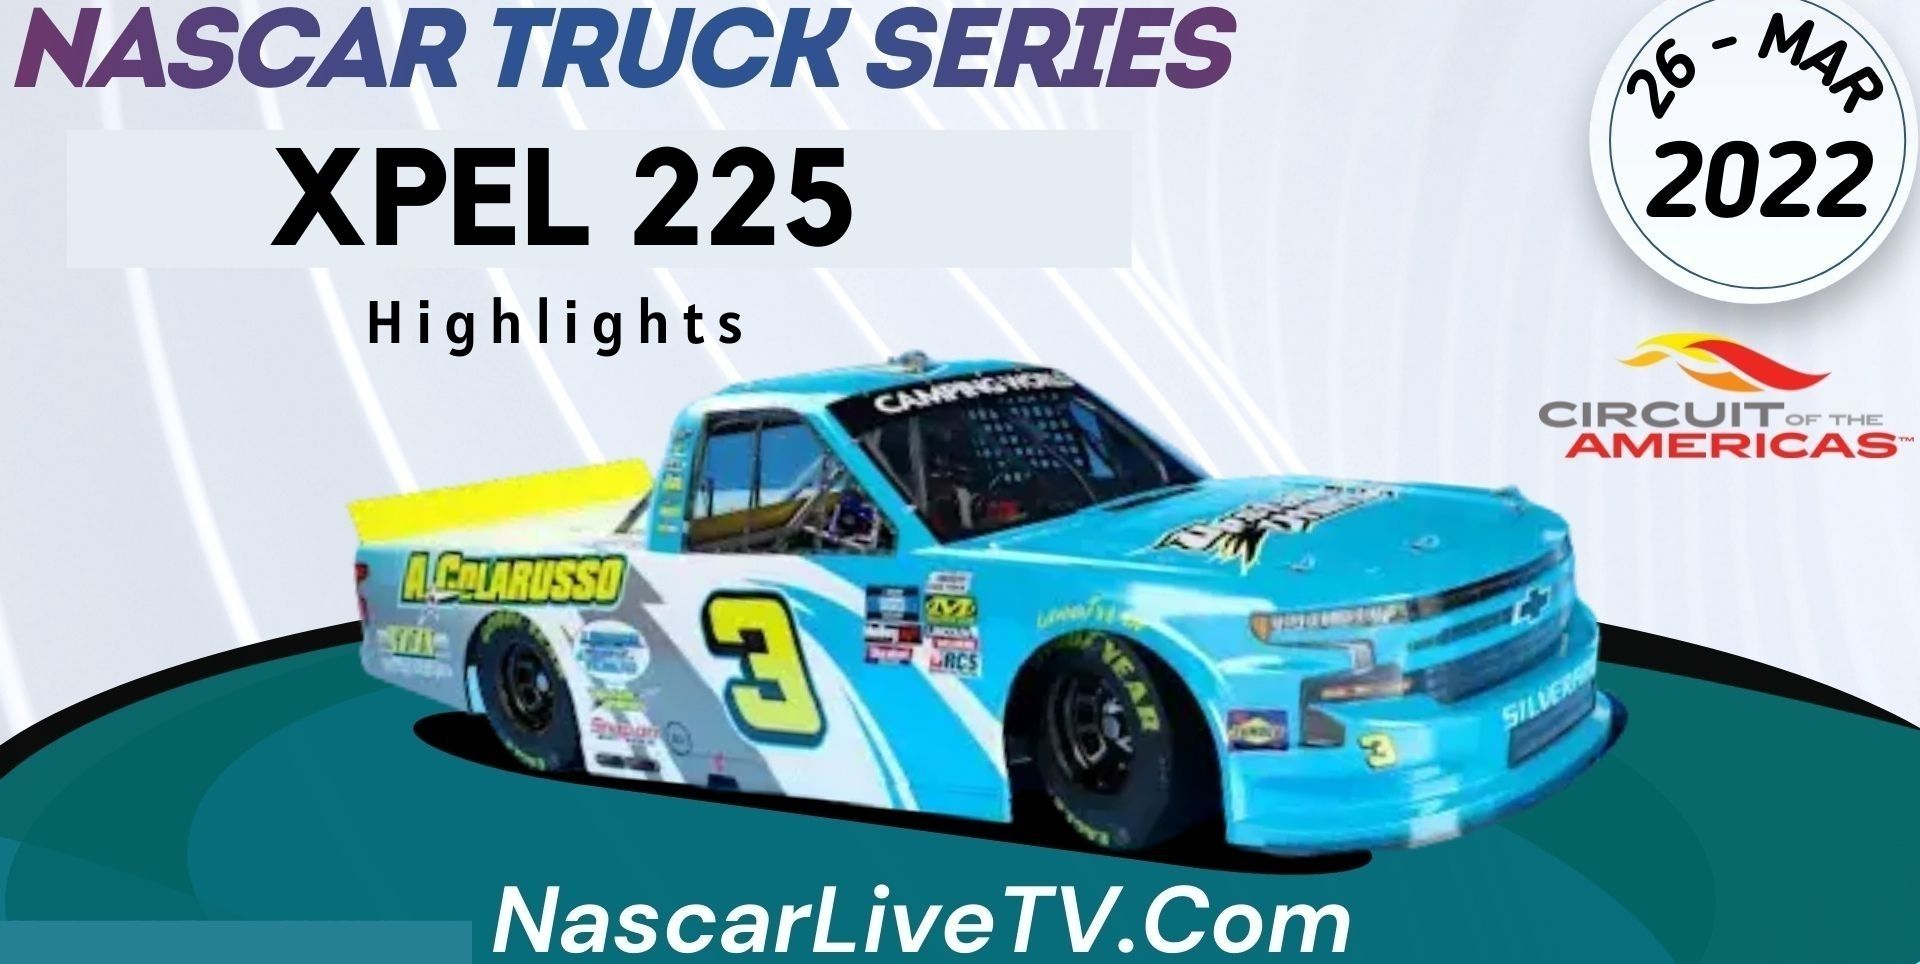 XPEL 225 Highlights NASCAR Truck Series 2022